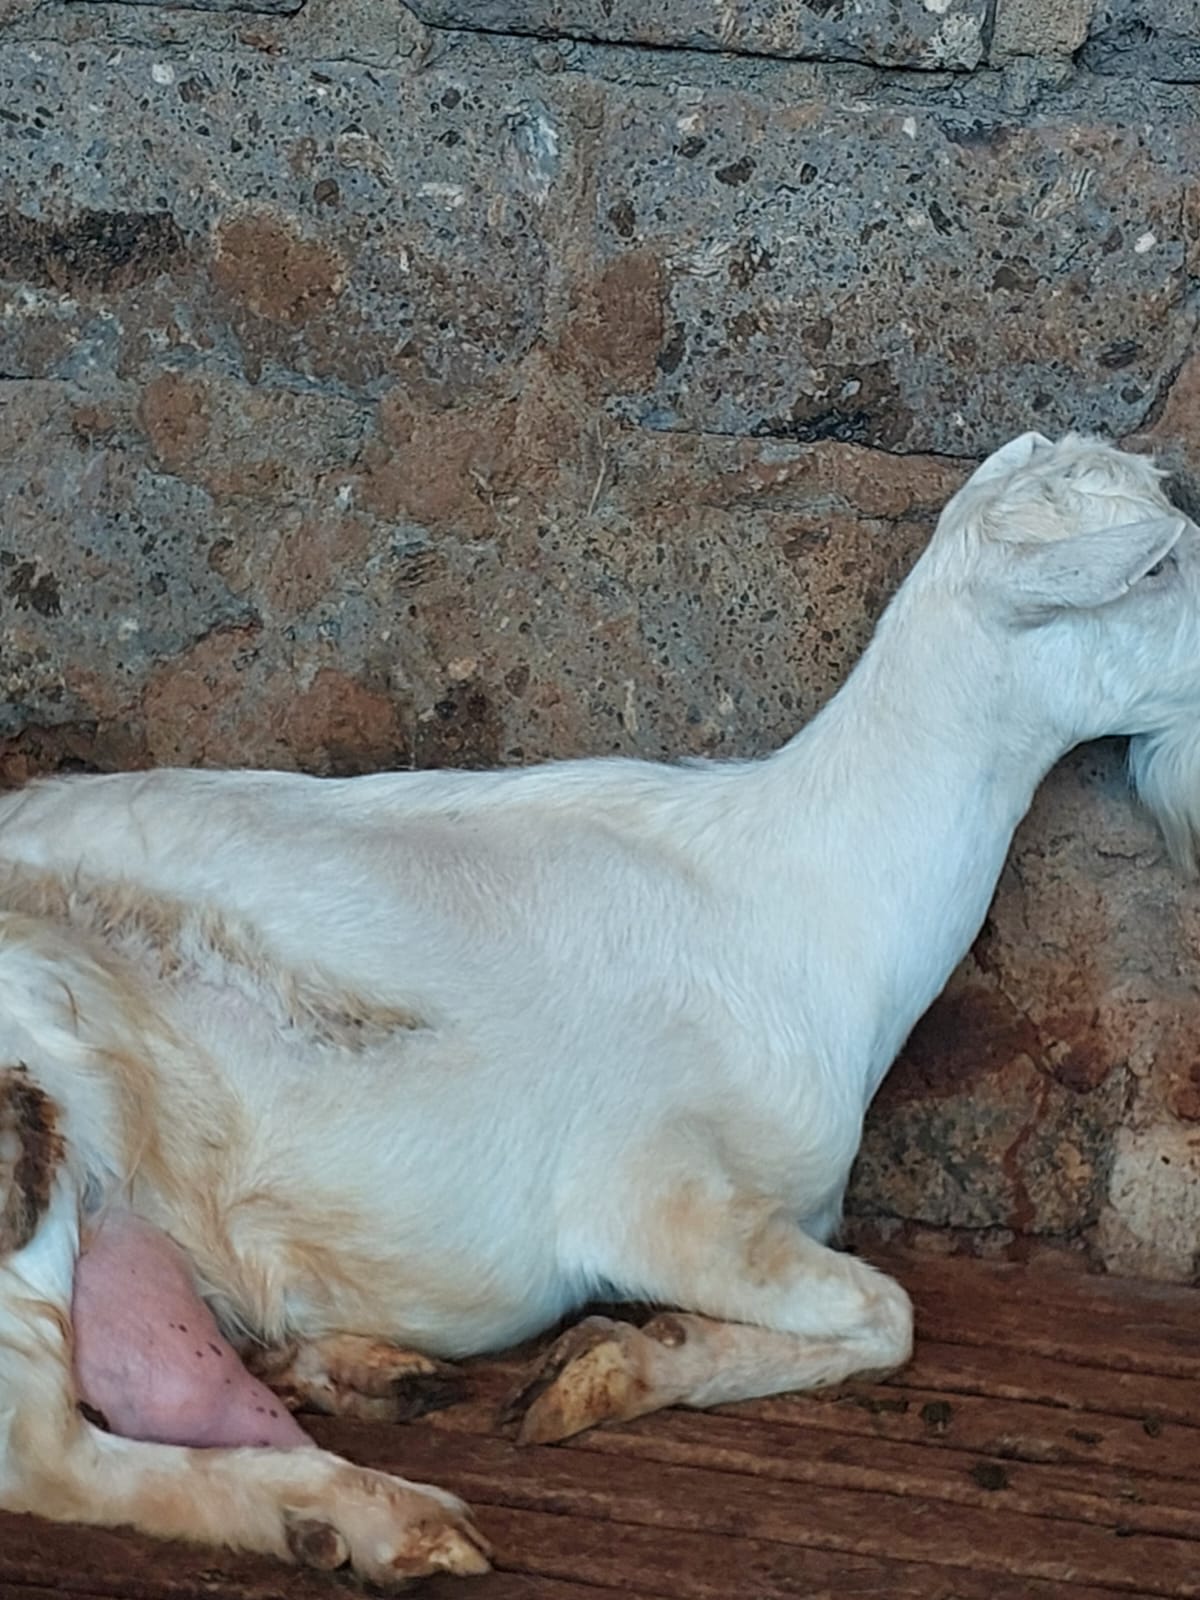 Carol Goats Dairy